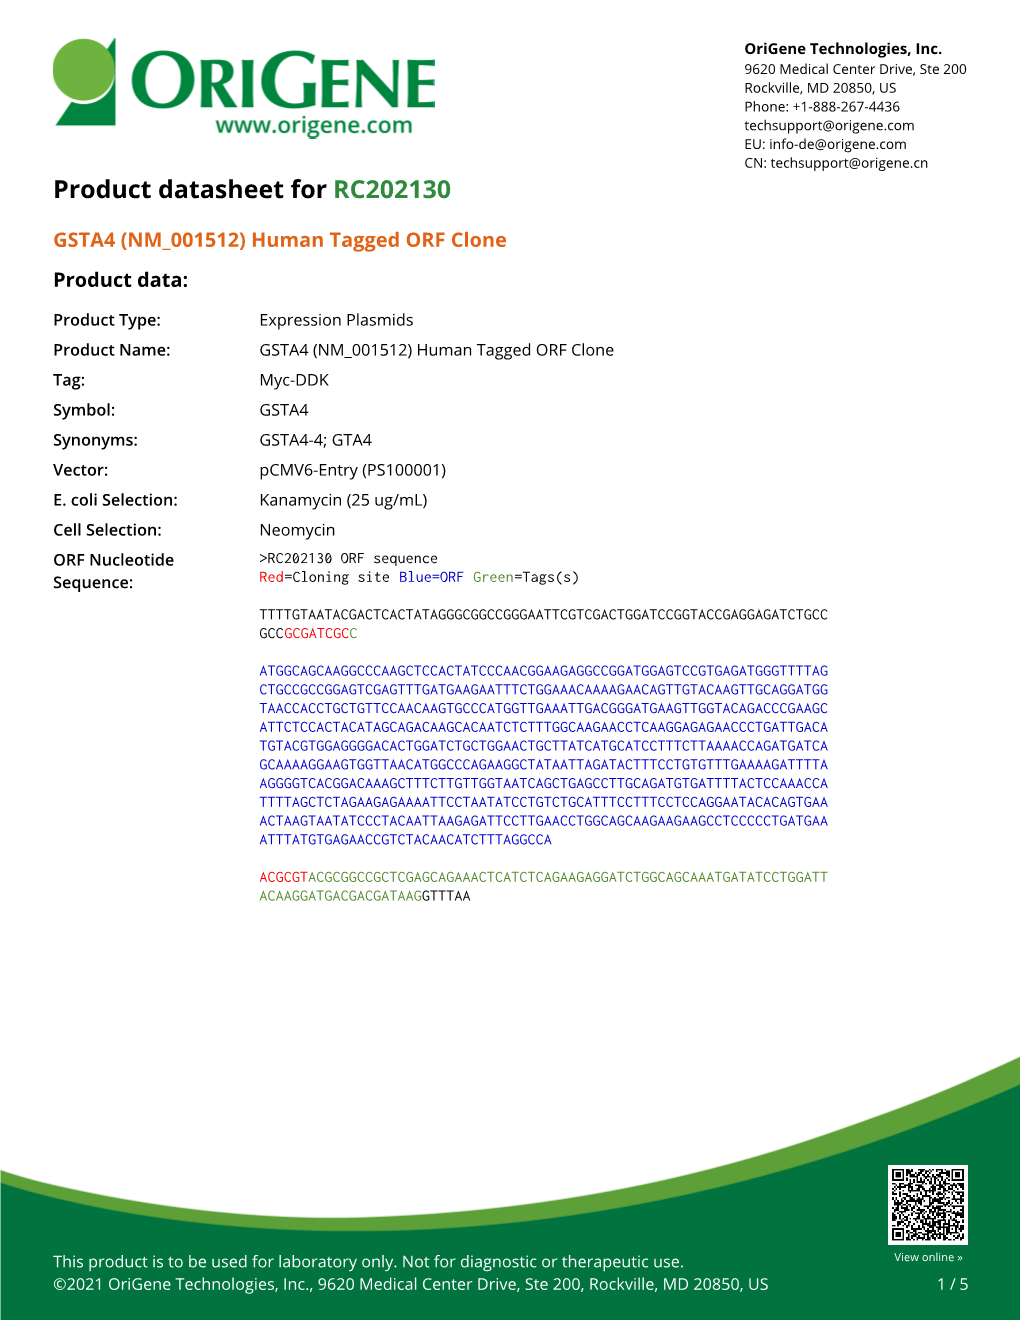 GSTA4 (NM 001512) Human Tagged ORF Clone – RC202130 | Origene